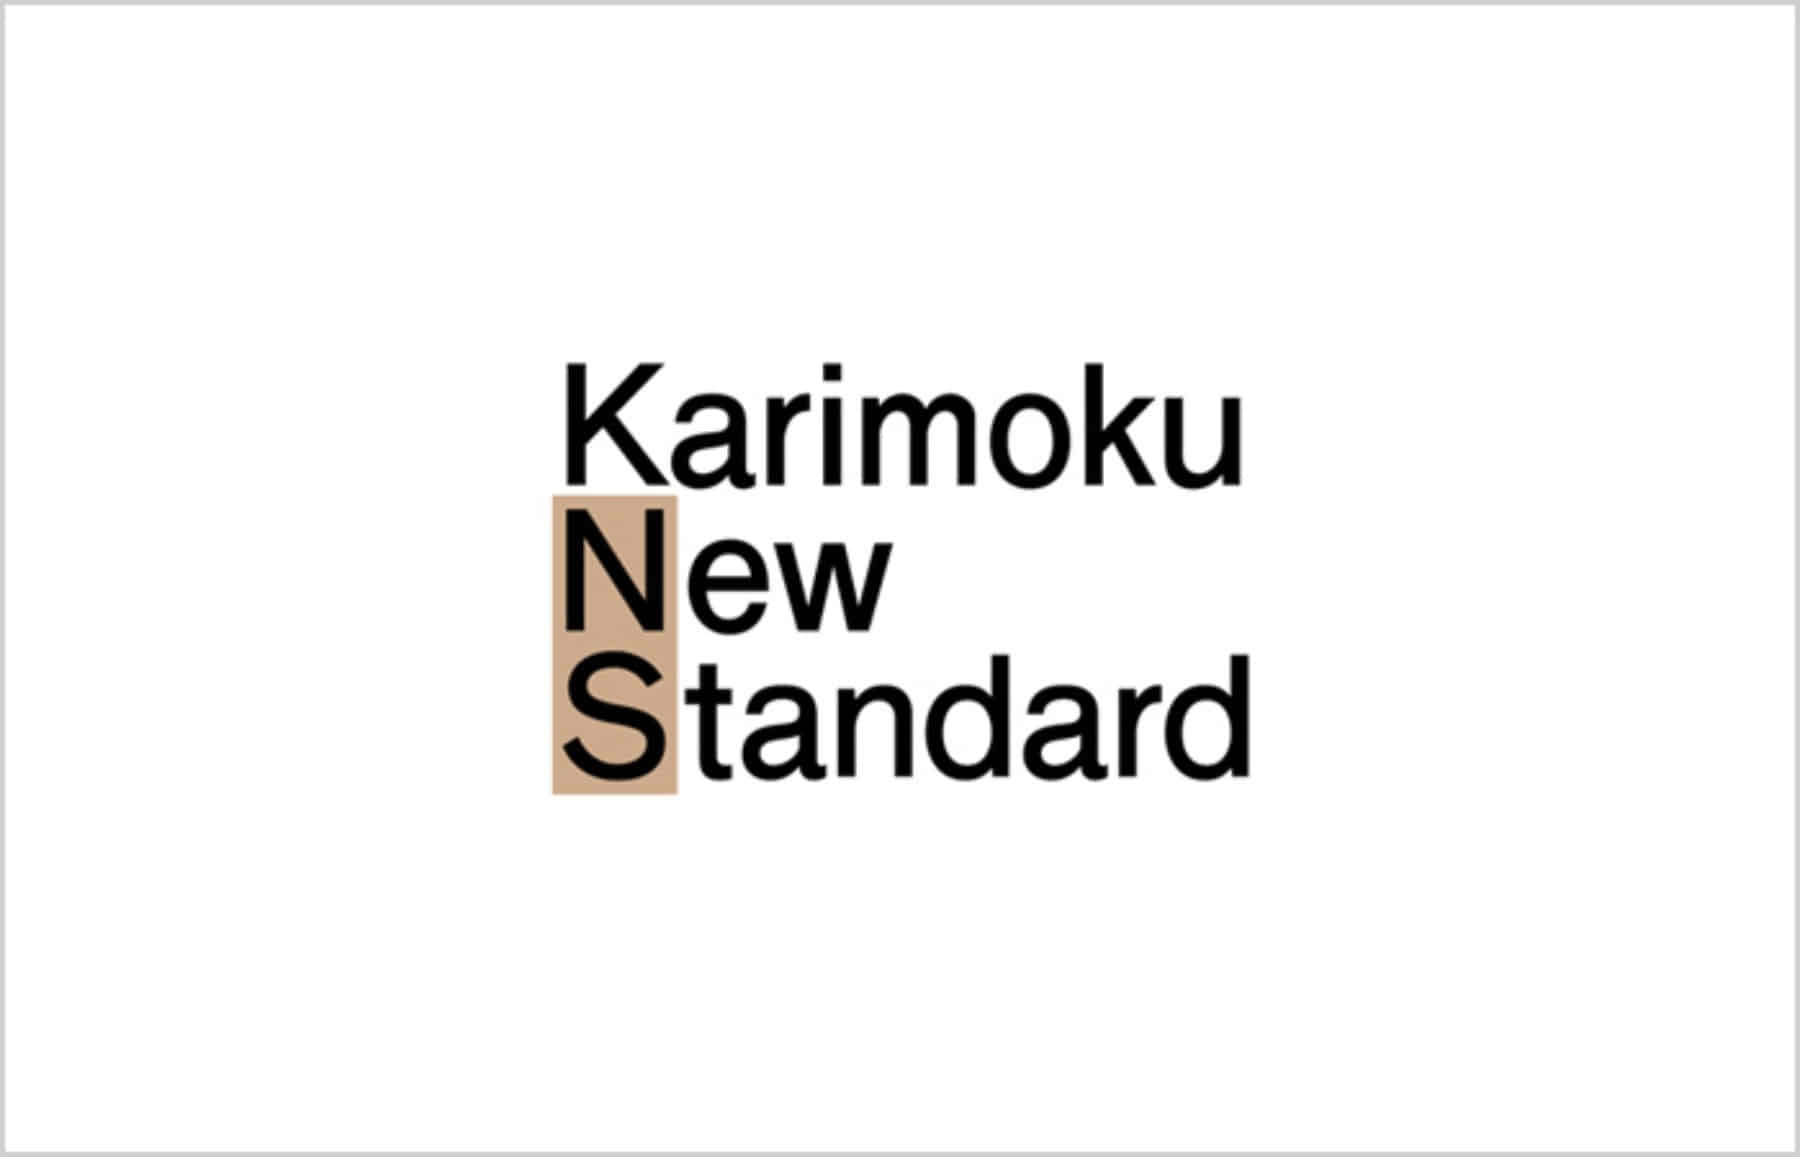 KARIMOKU NEW STANDARD  가리모쿠 뉴 스탠다드